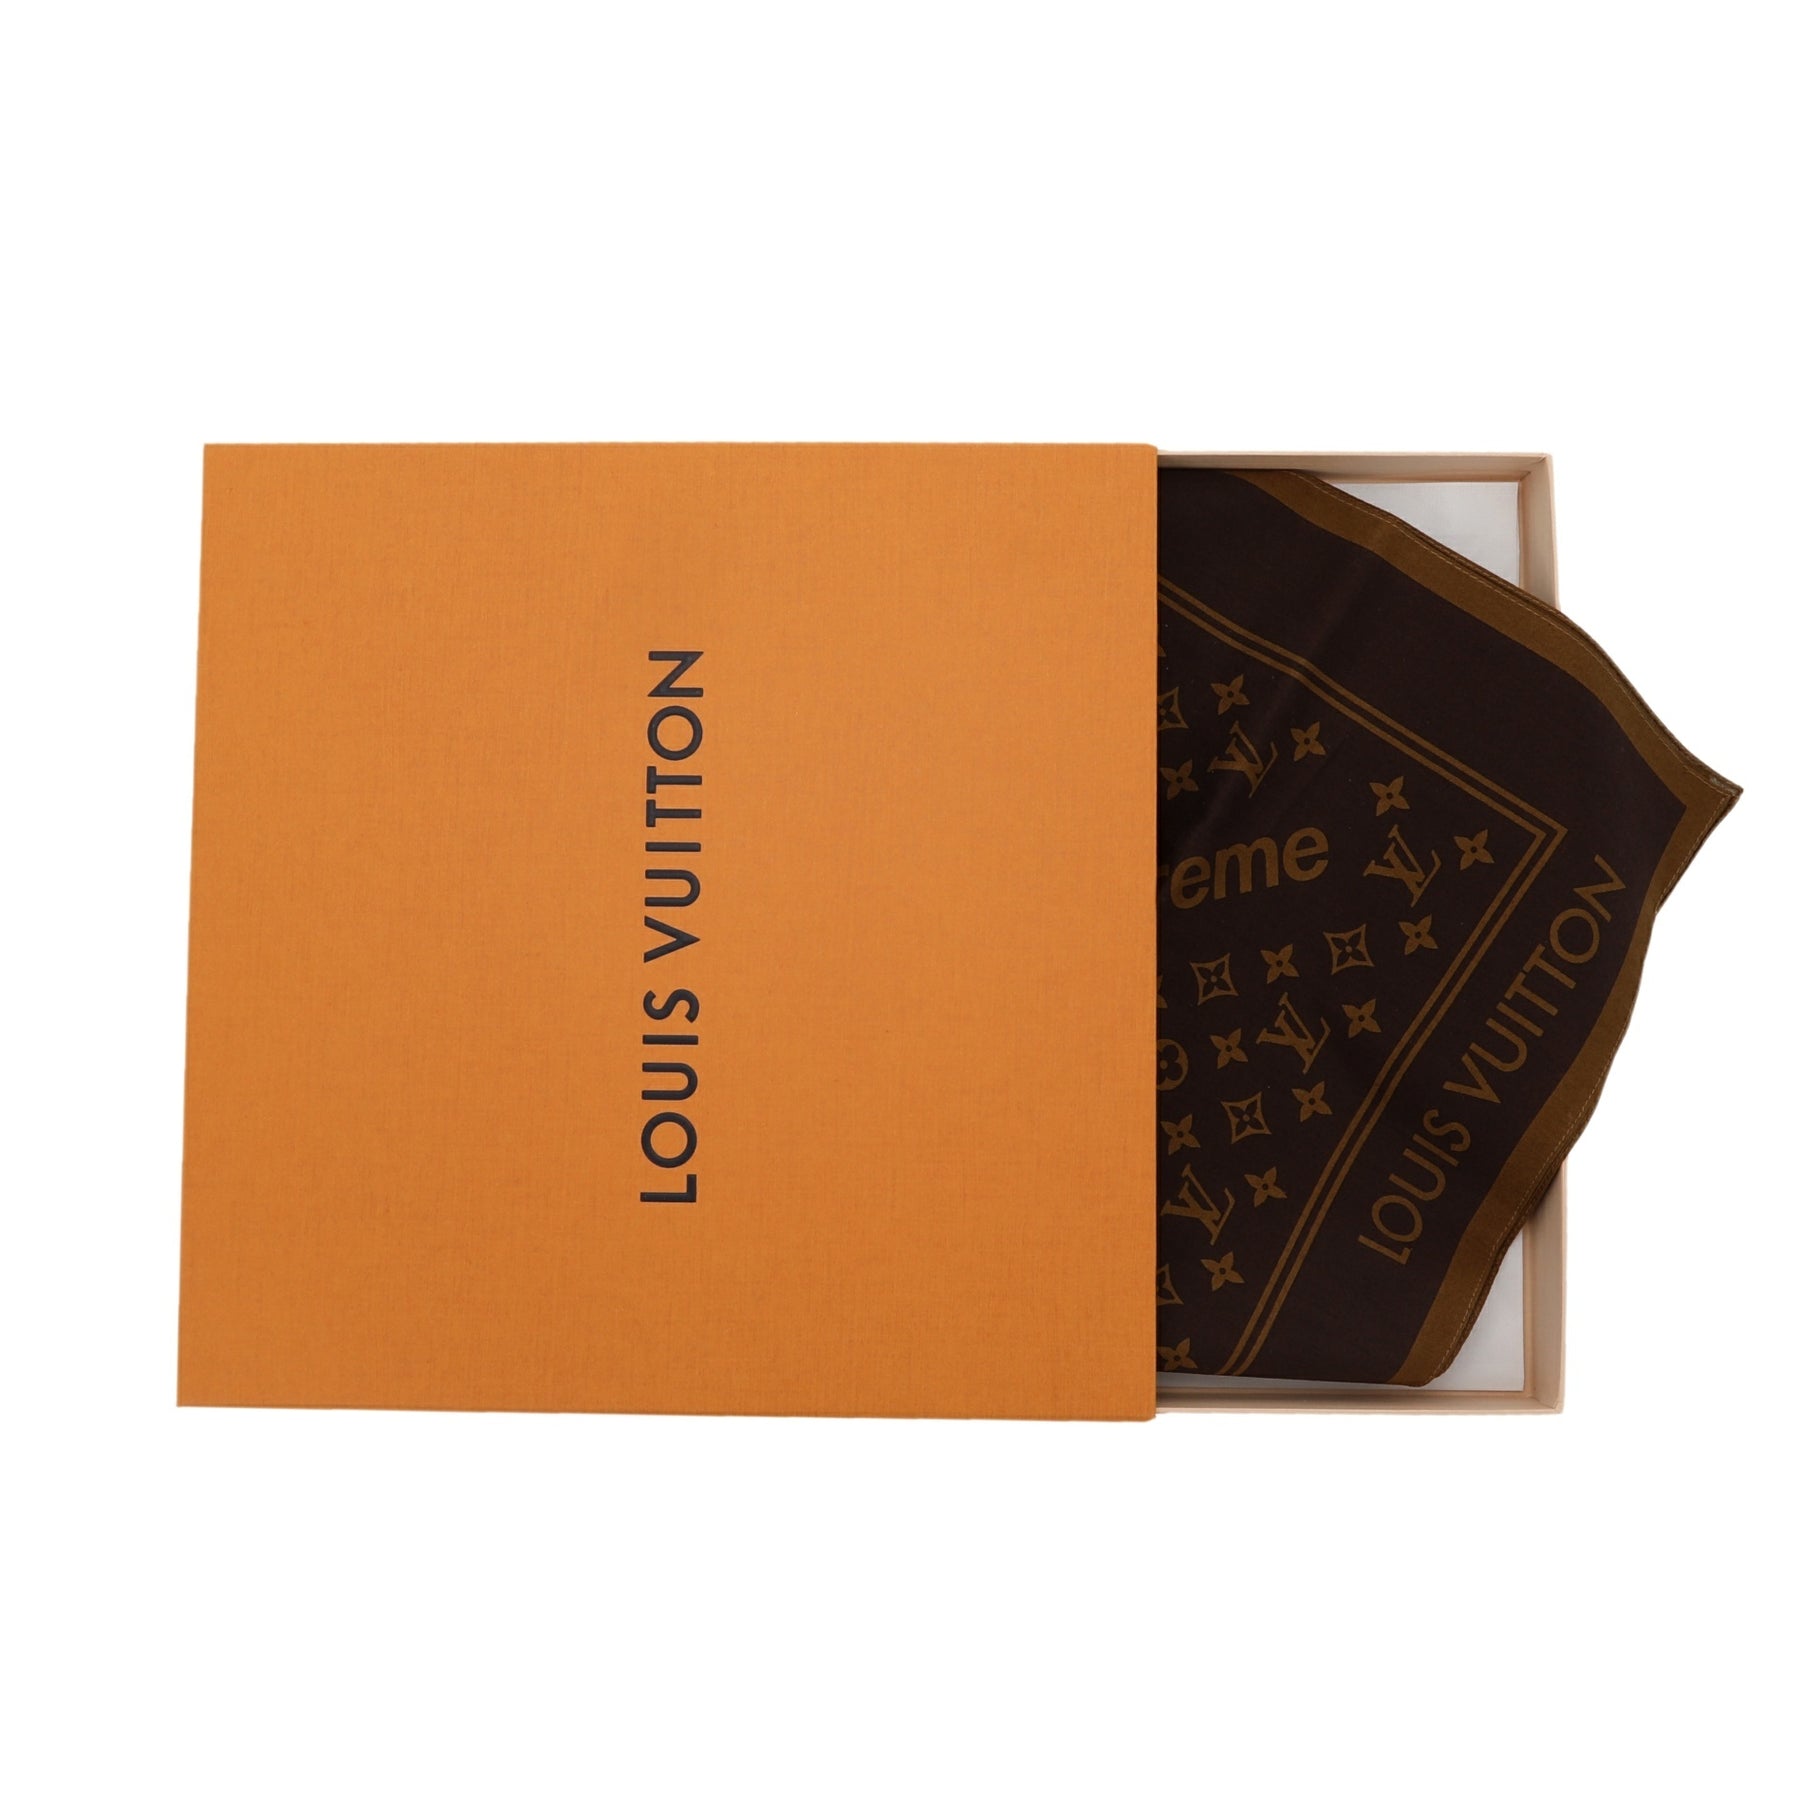 Louis Vuitton Monogram Bandana Windbreaker Orange/White